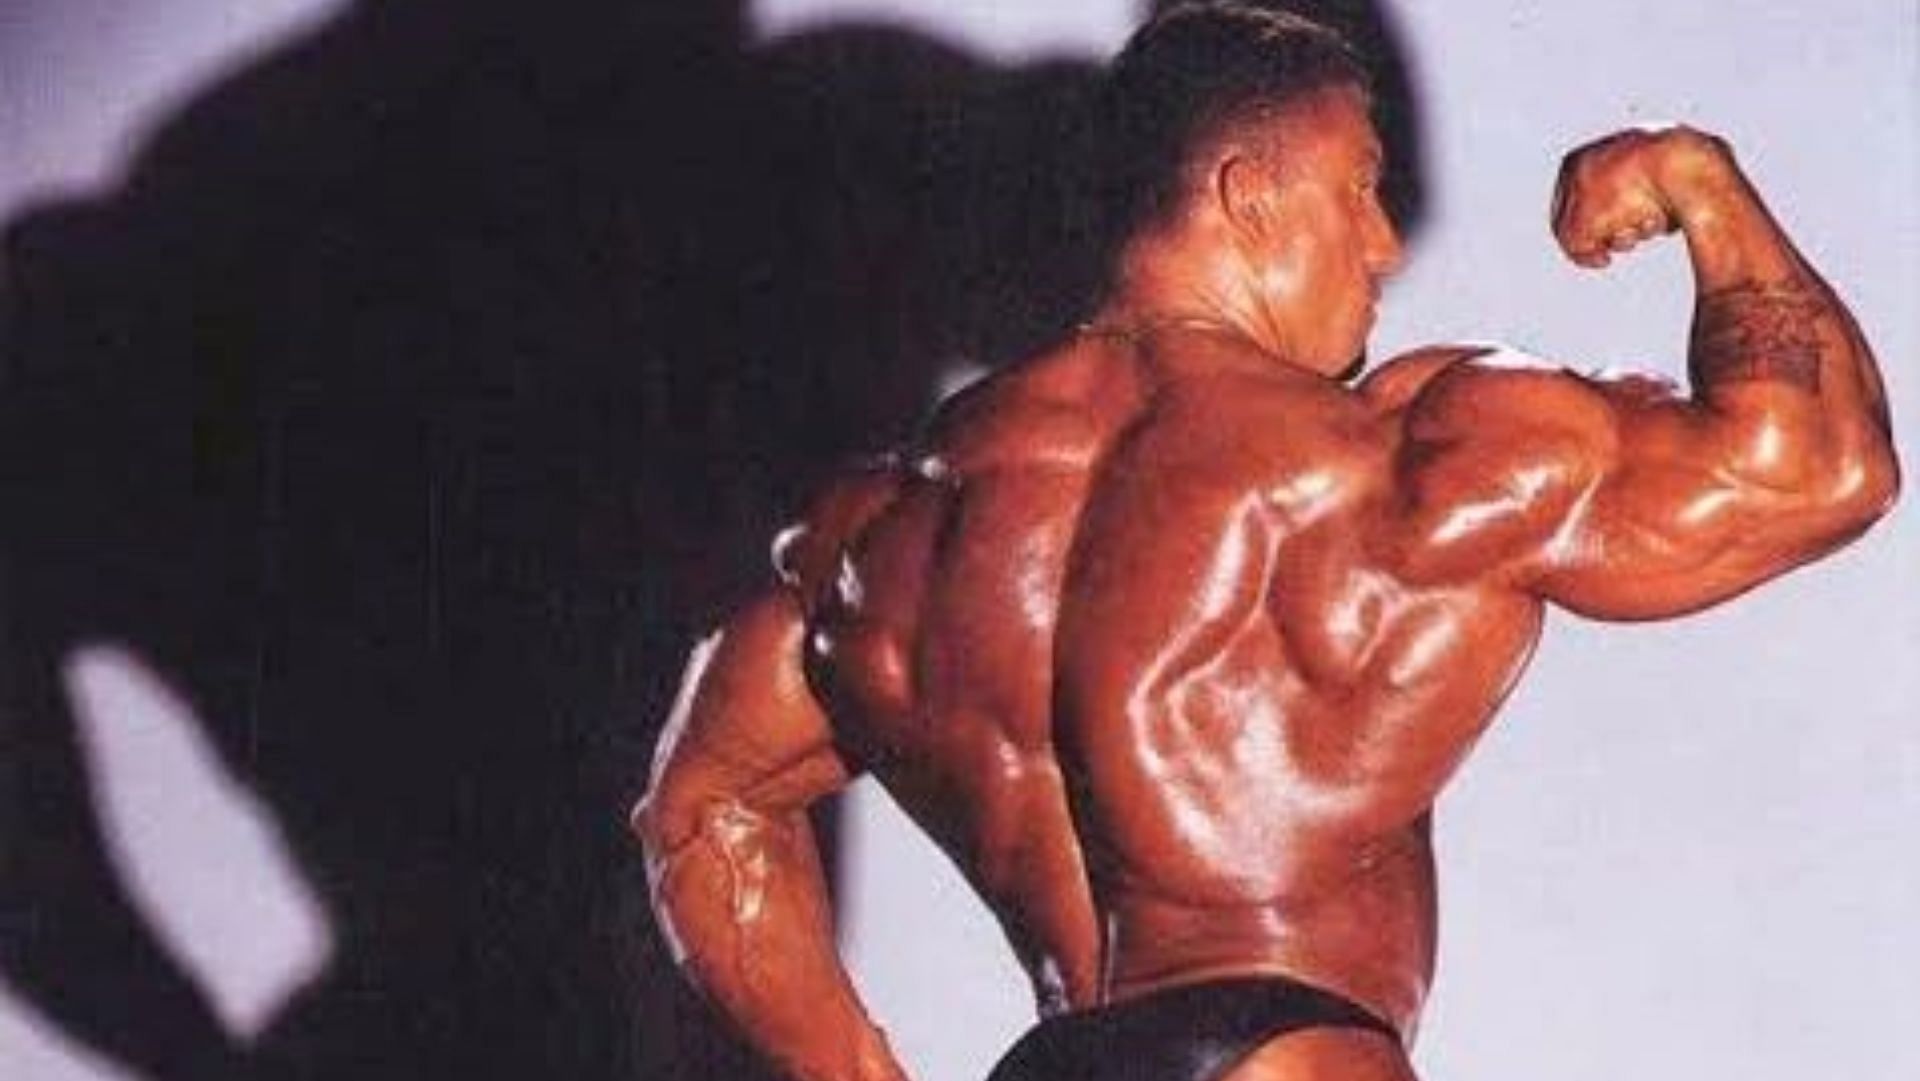 Dorian Yates revealed his secrets behind the muscular physique. (Photo via Dorian Yates